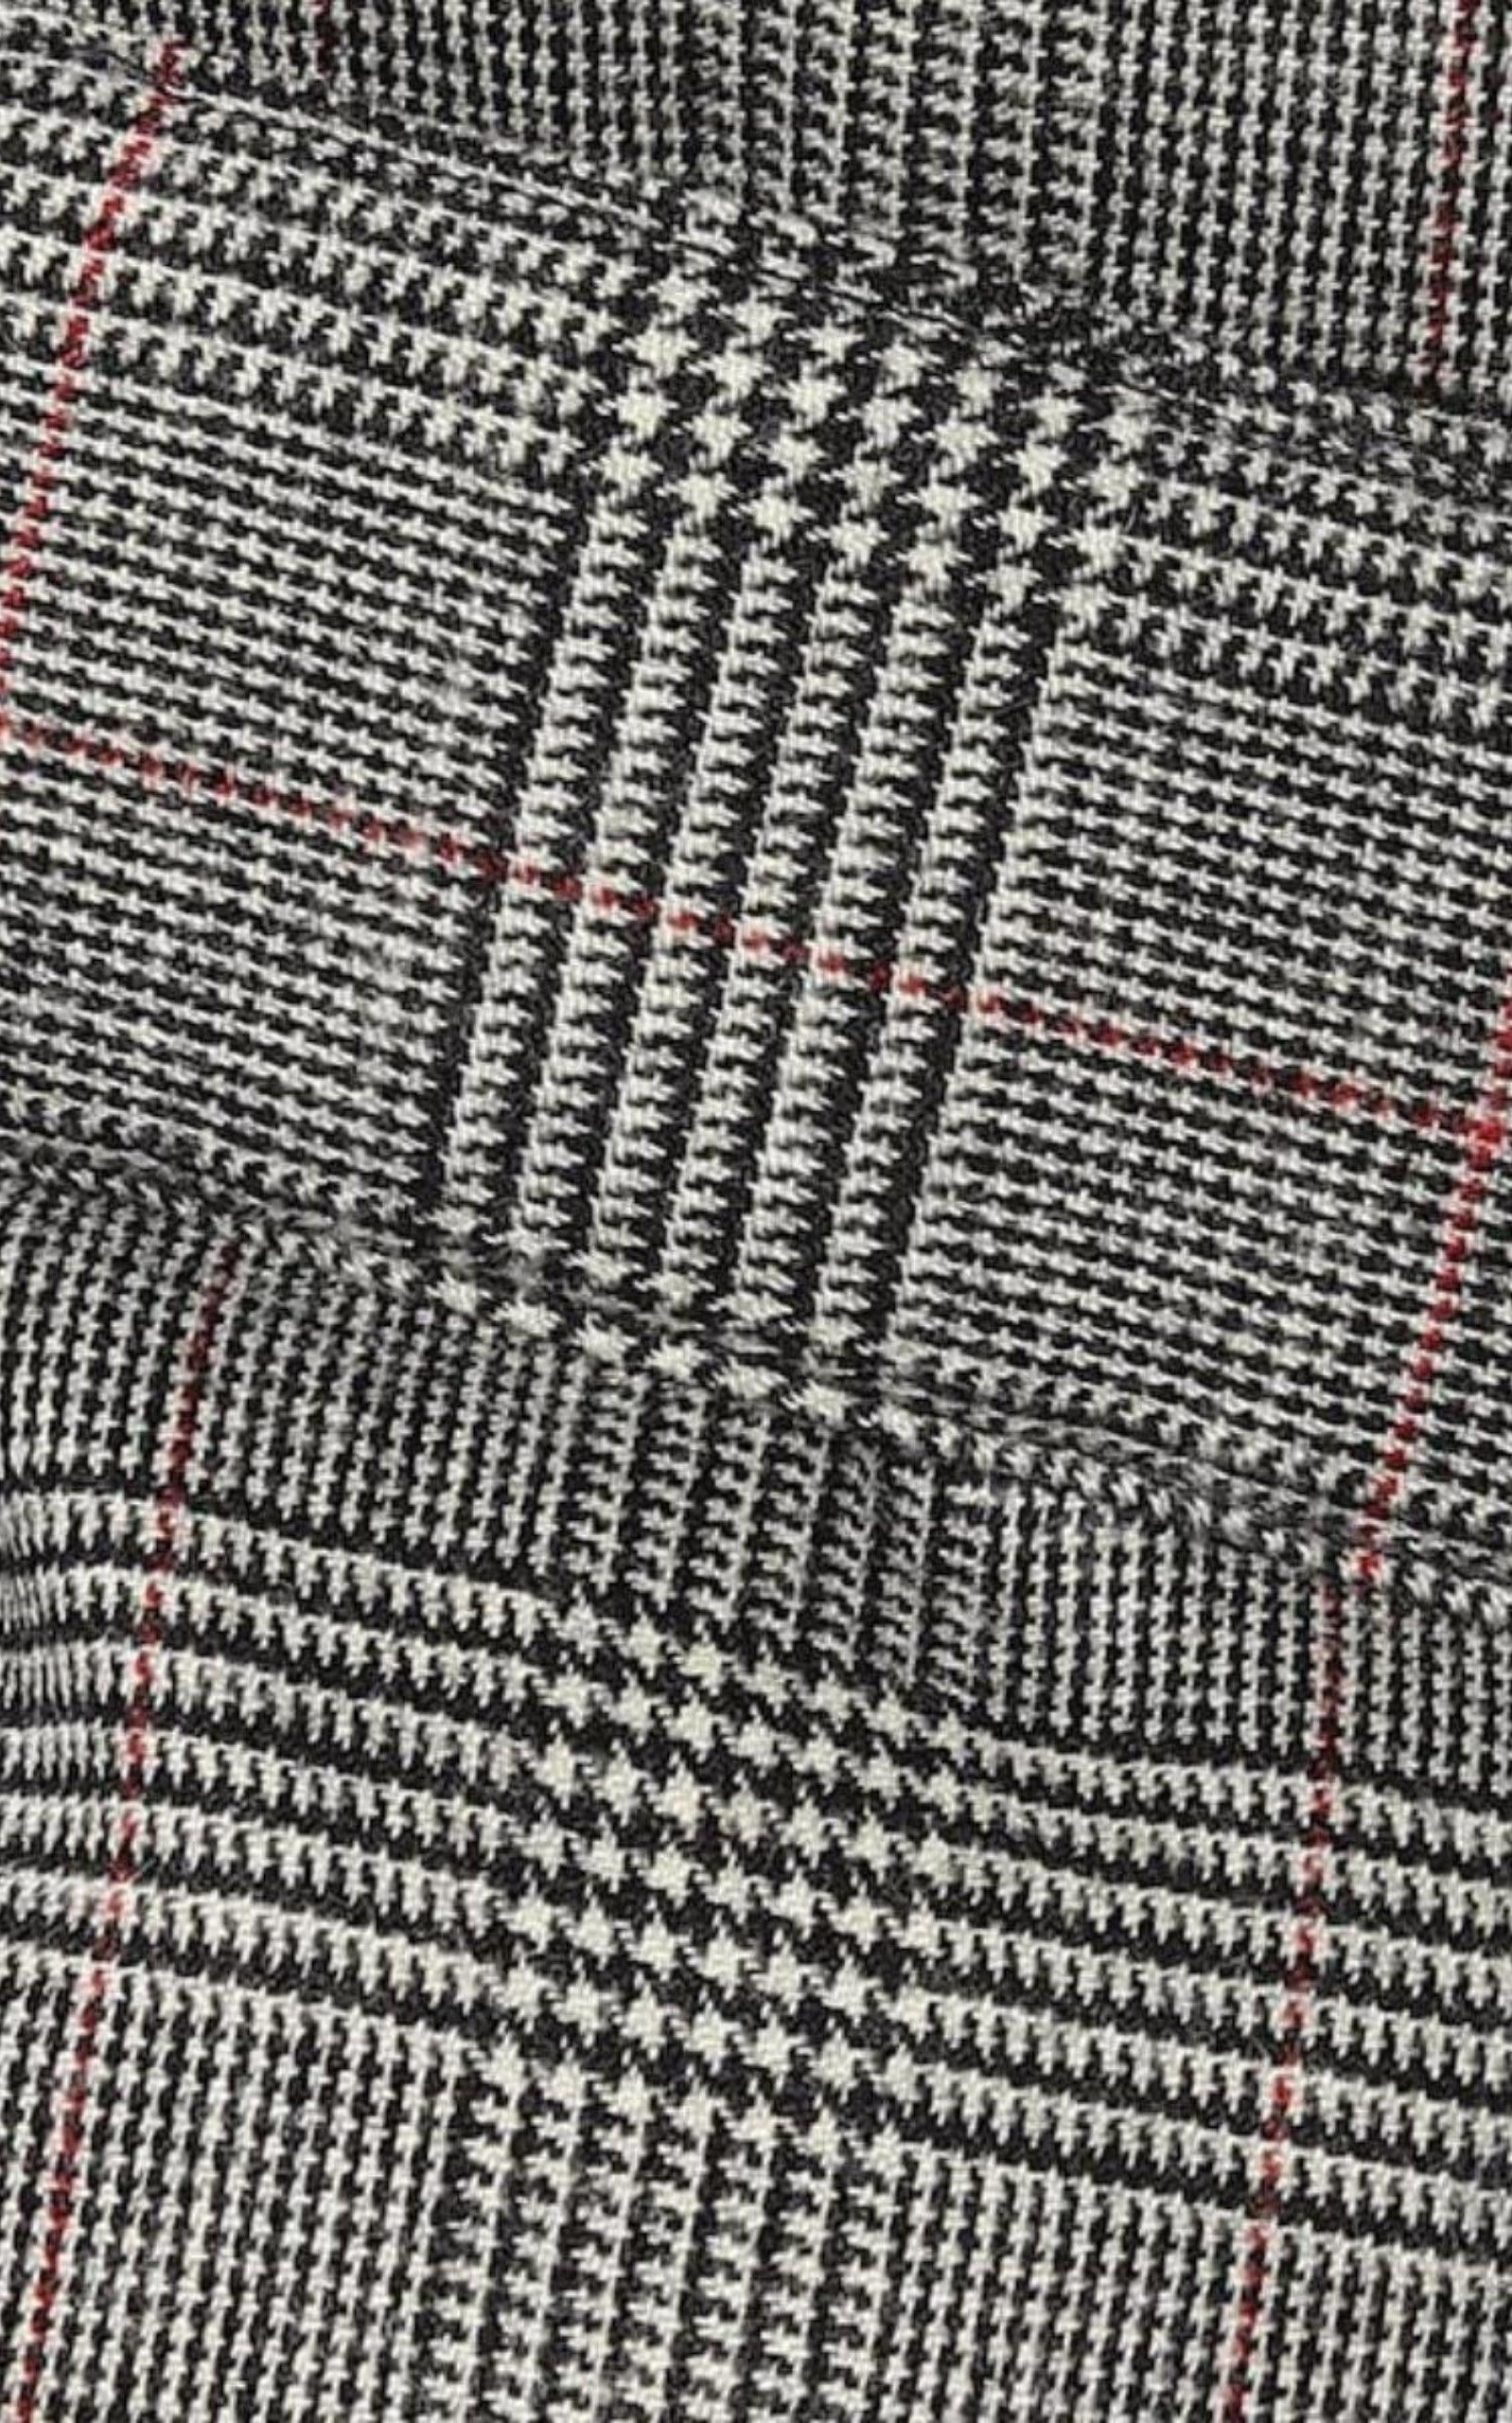  Alexandre VauthierChecked Stretch-Wool Puffer Jacket - Runway Catalog